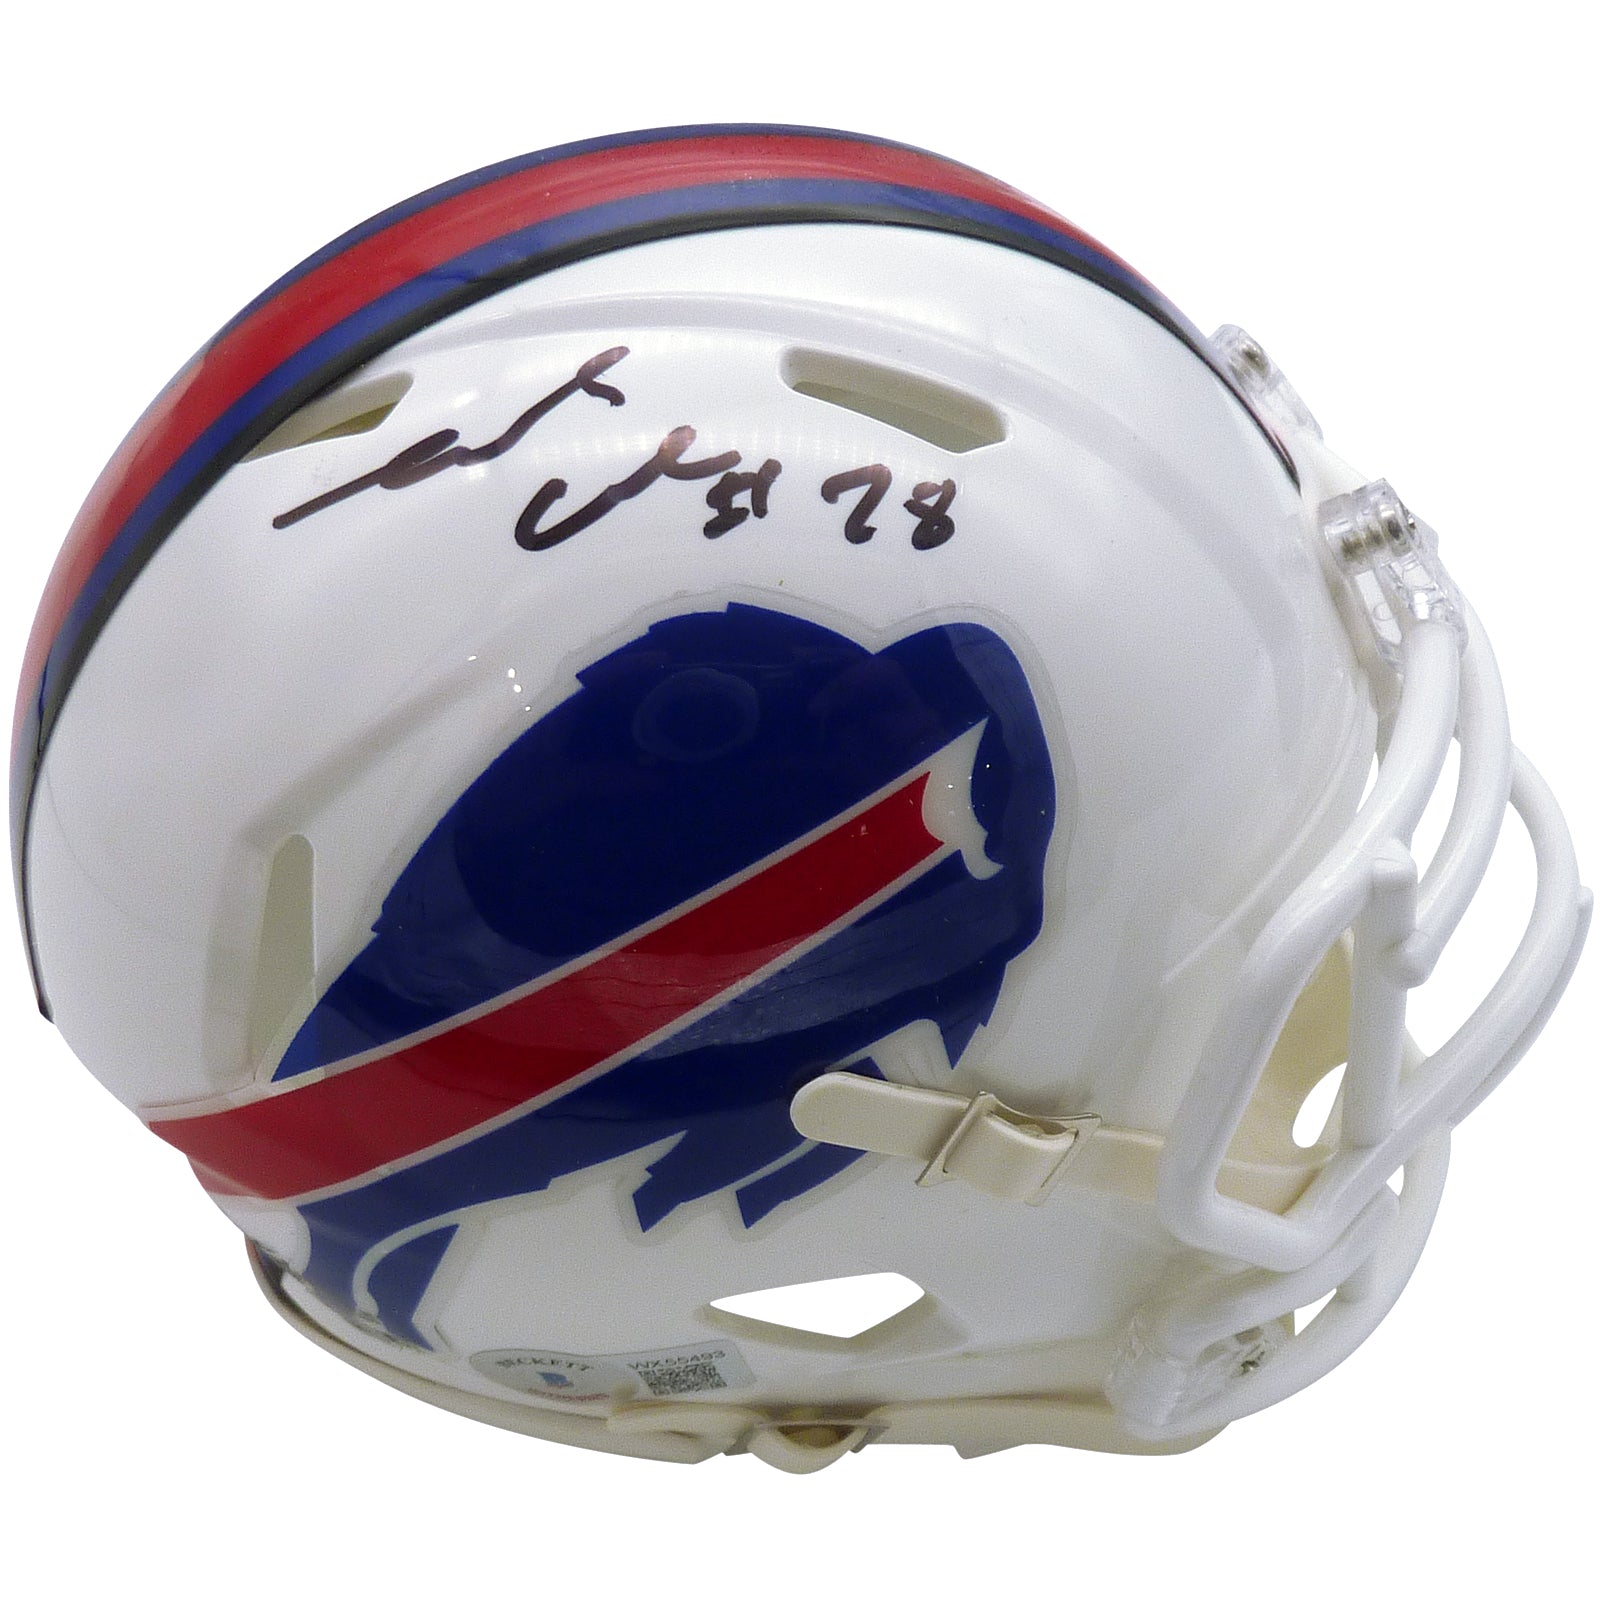 James Cook Autographed Buffalo Bills Mini Helmet - JSA